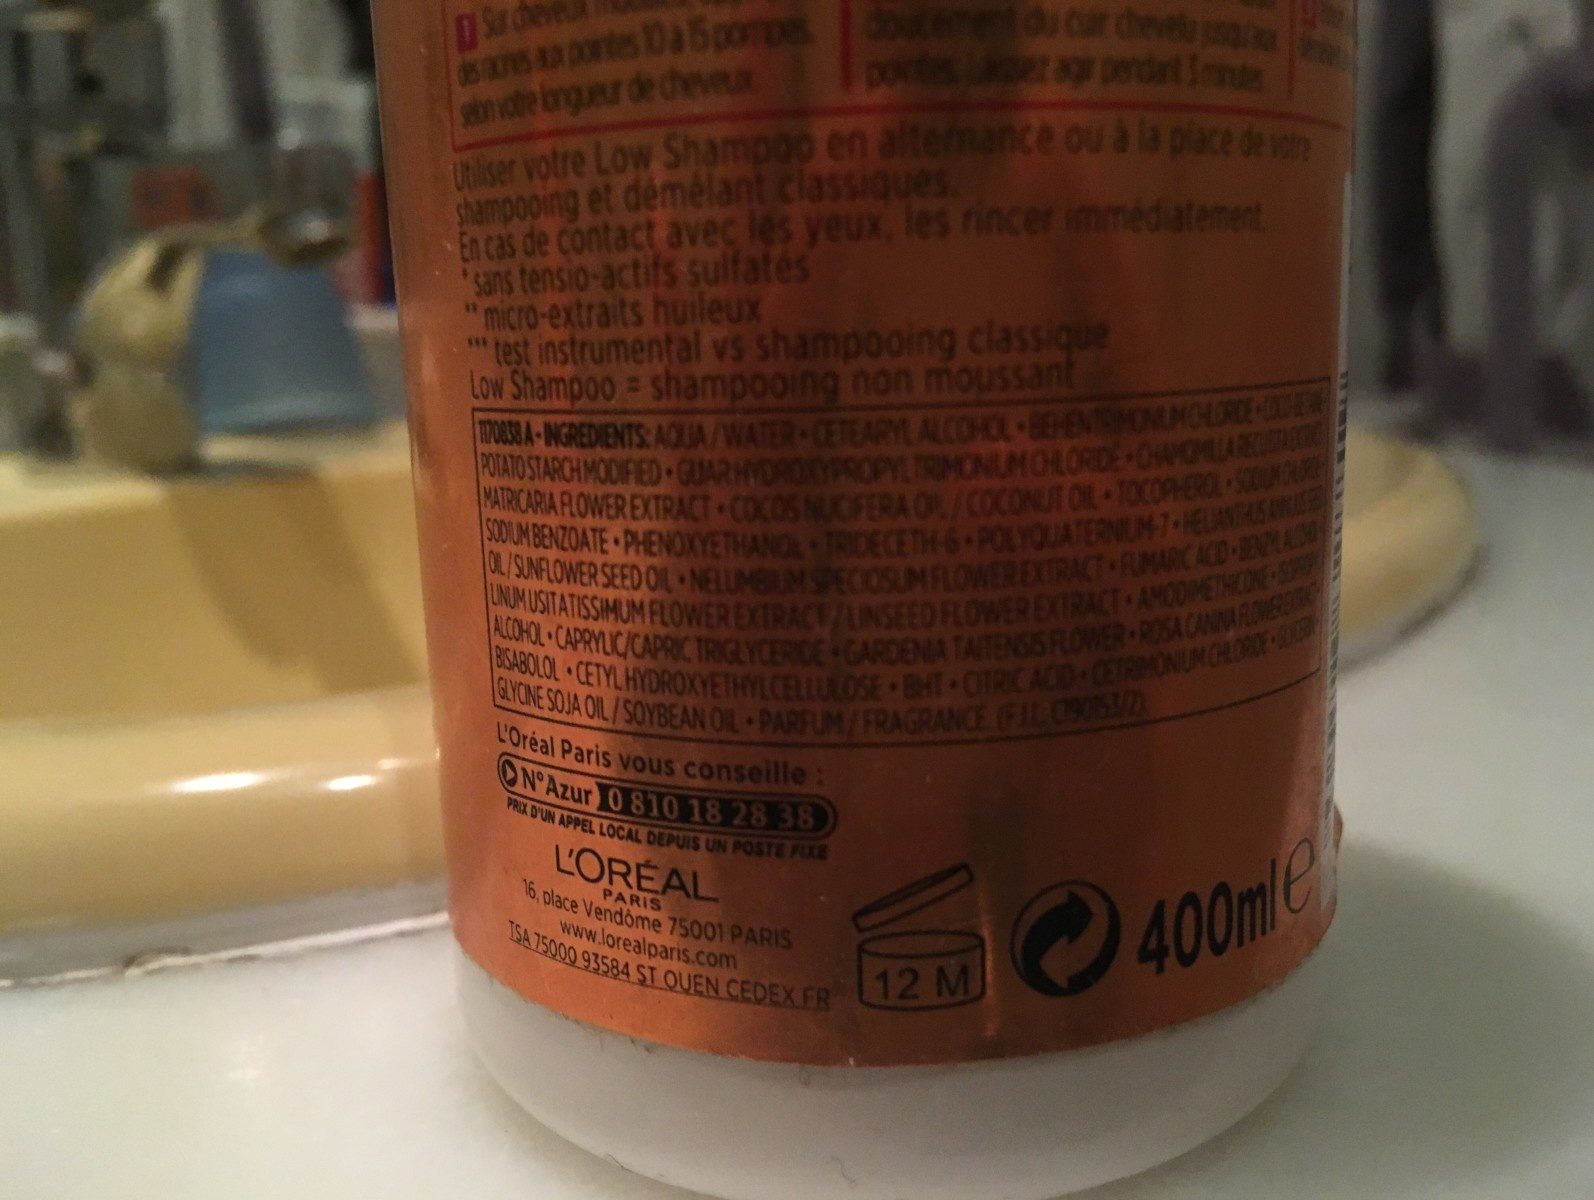 Low shampoo huile extraordinaire - Ингредиенты - fr